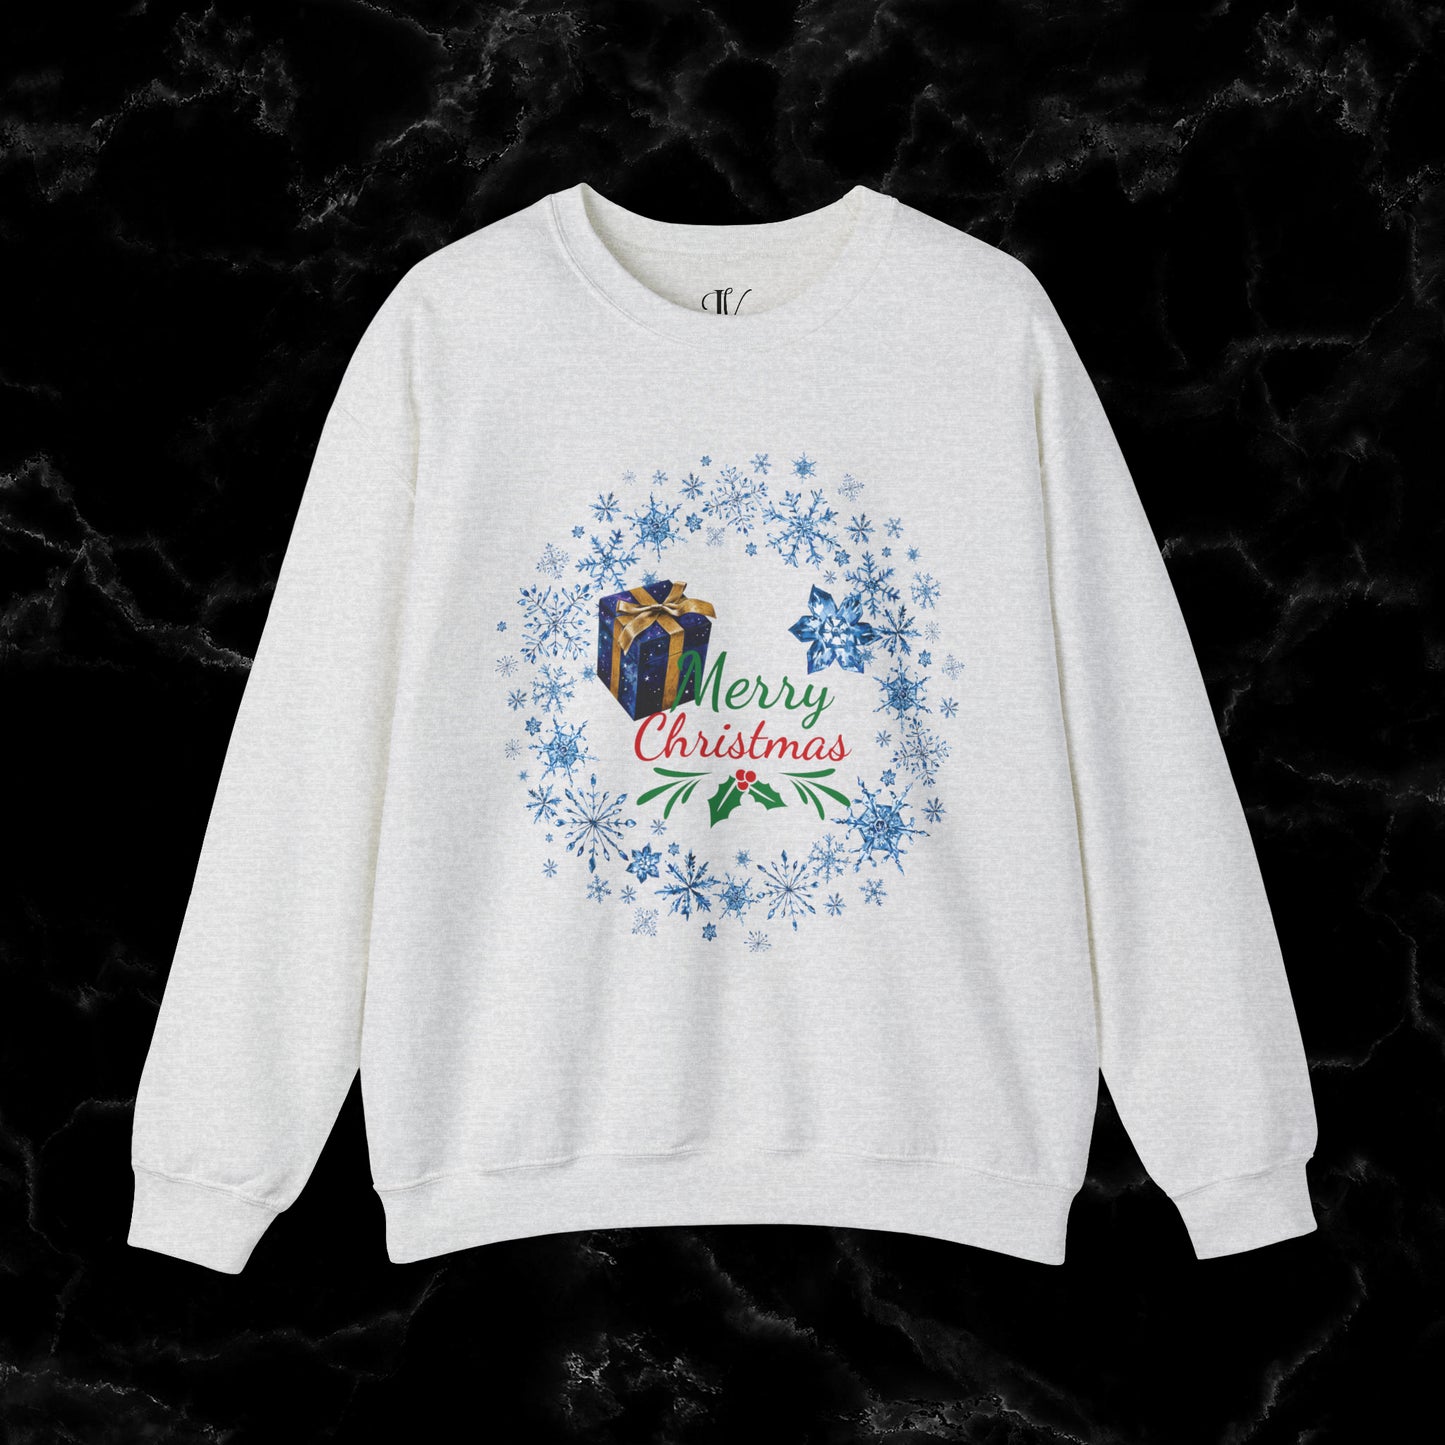 Merry Christmas Sweatshirt - Matching Christmas Shirt, Wreath Design, Holiday Gift Sweatshirt S Ash 